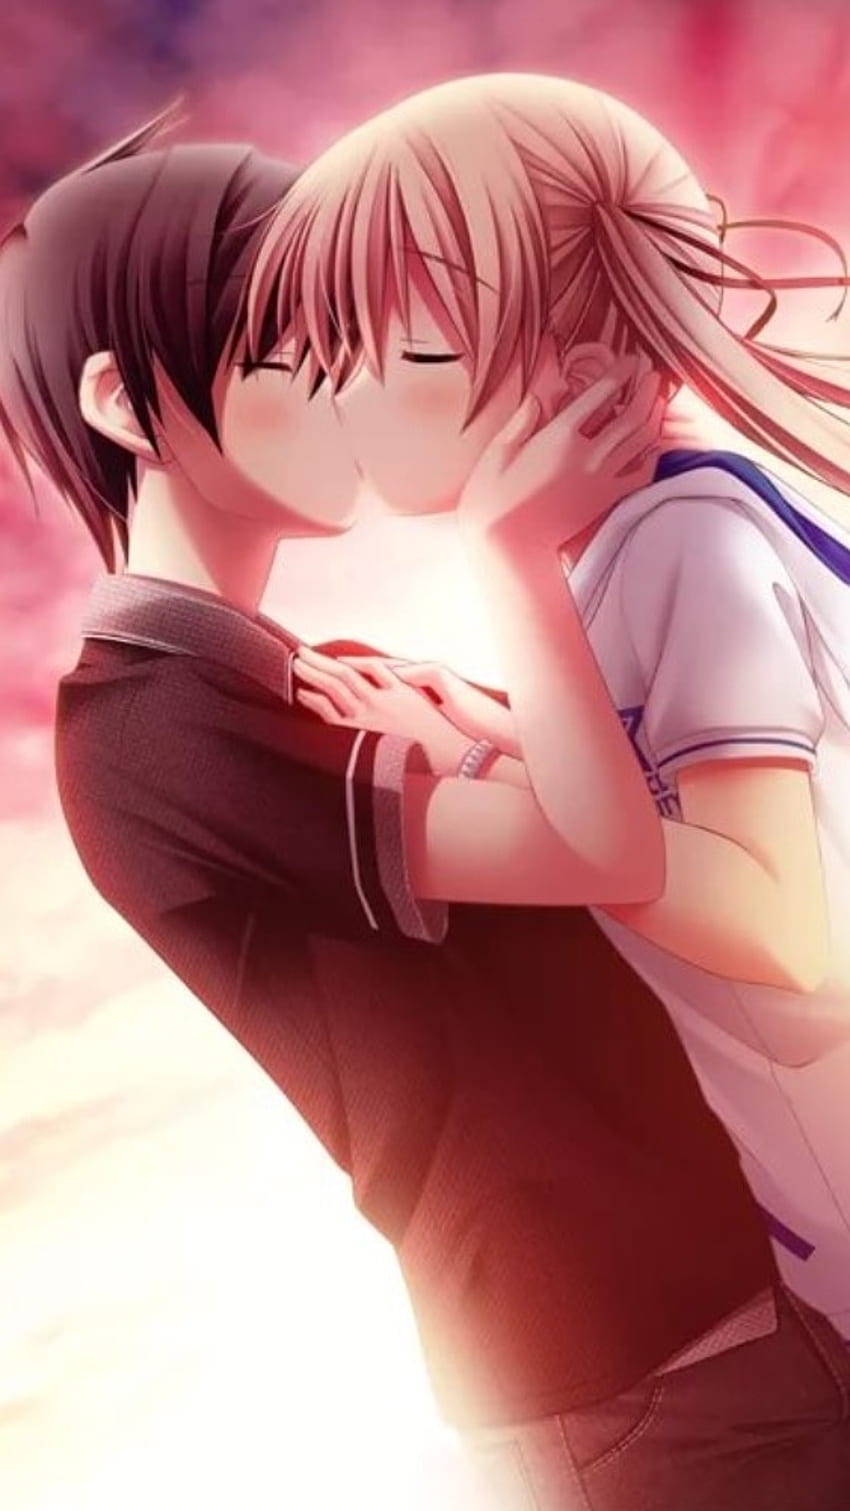 Share Anime Kiss Wallpaper Super Hot In Eteachers